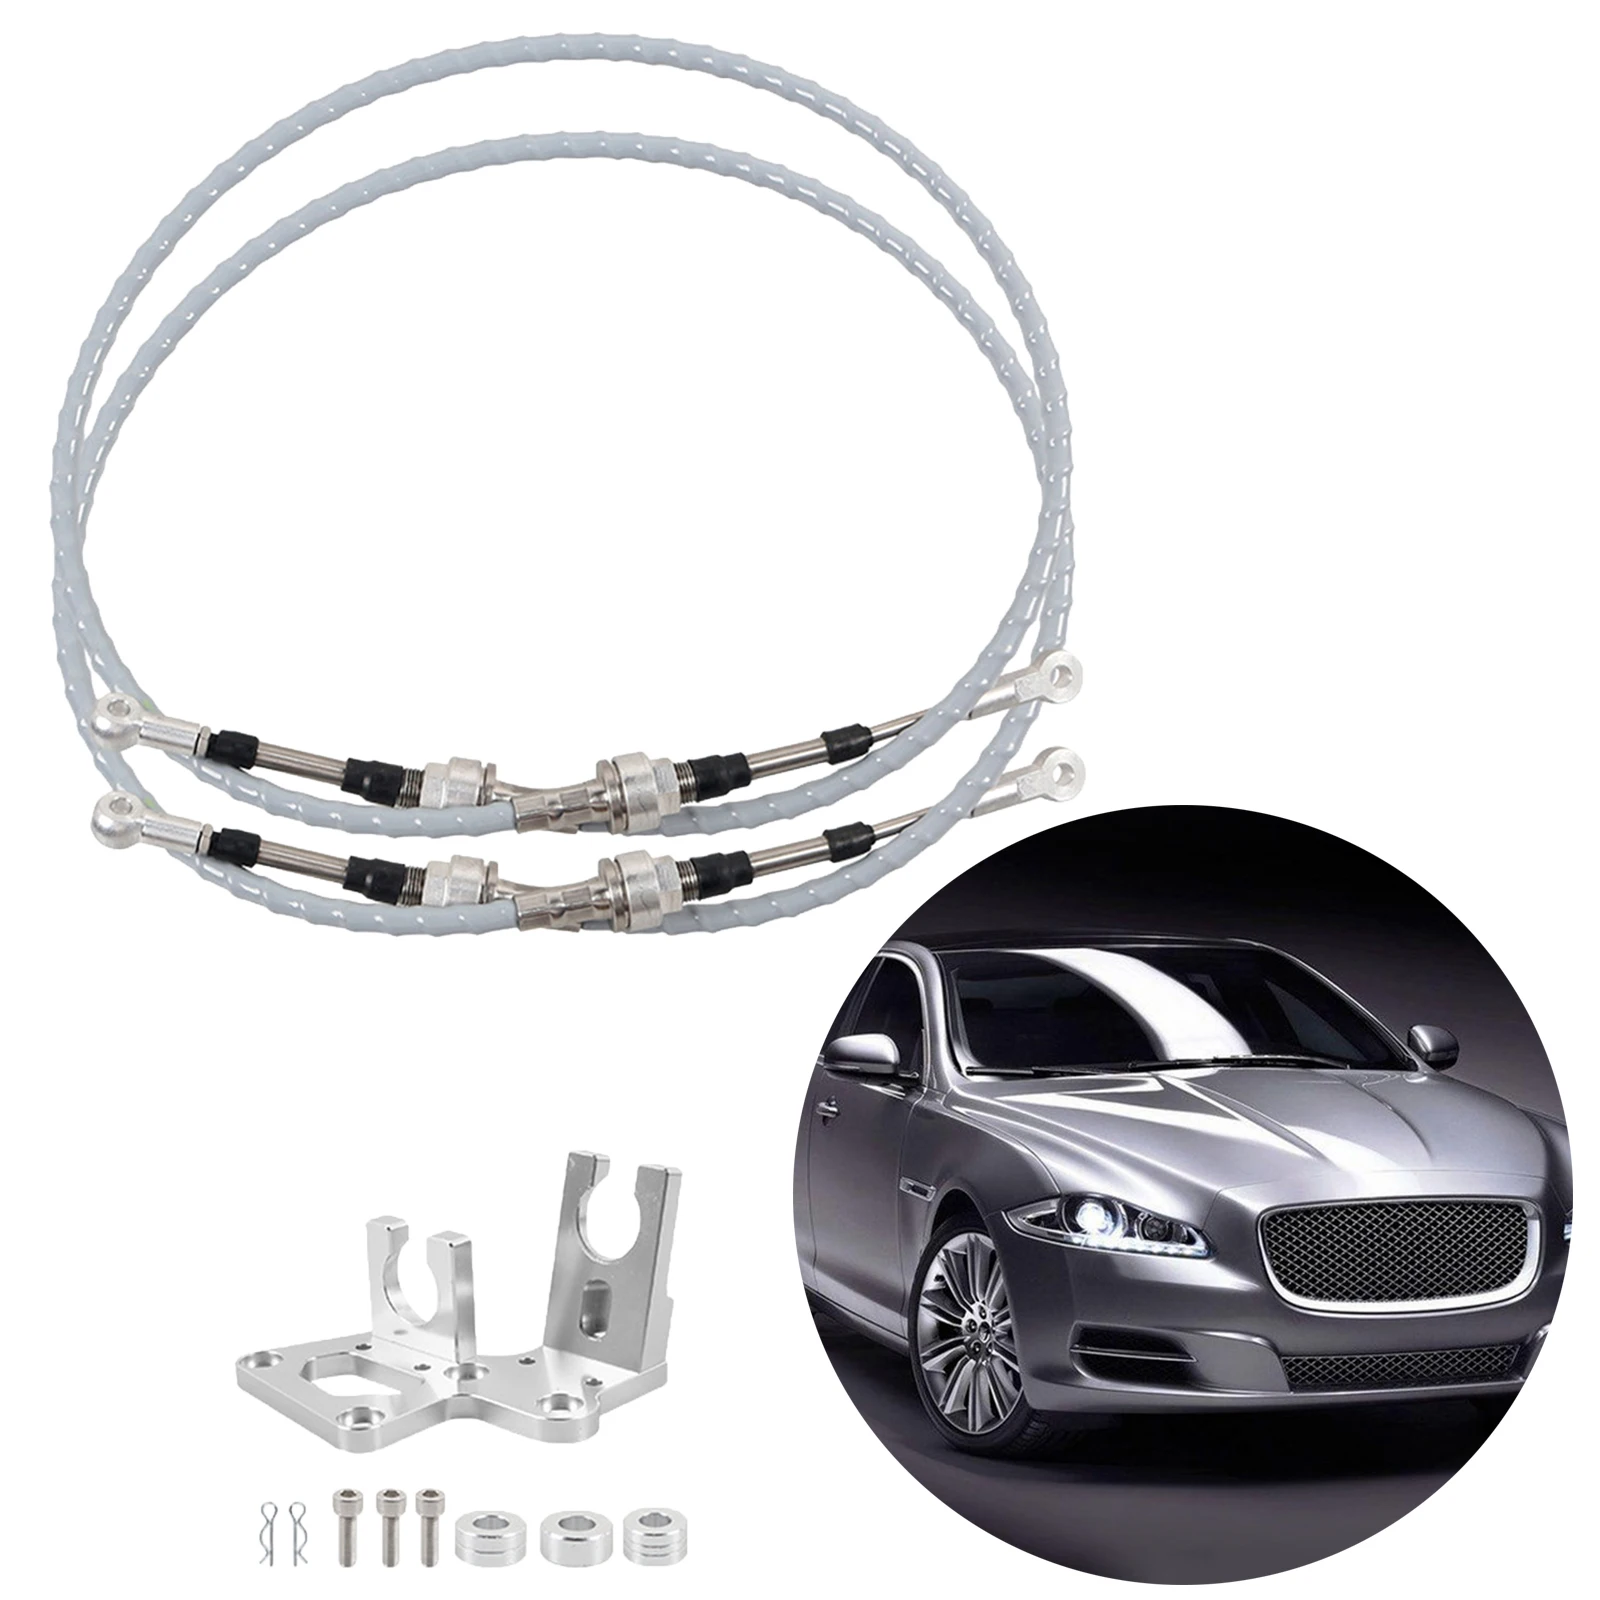 Trans Shifter Cable Bracket Kit for Honda Civic K Swap Series EG EK DC2 Advanced manufacturing technology